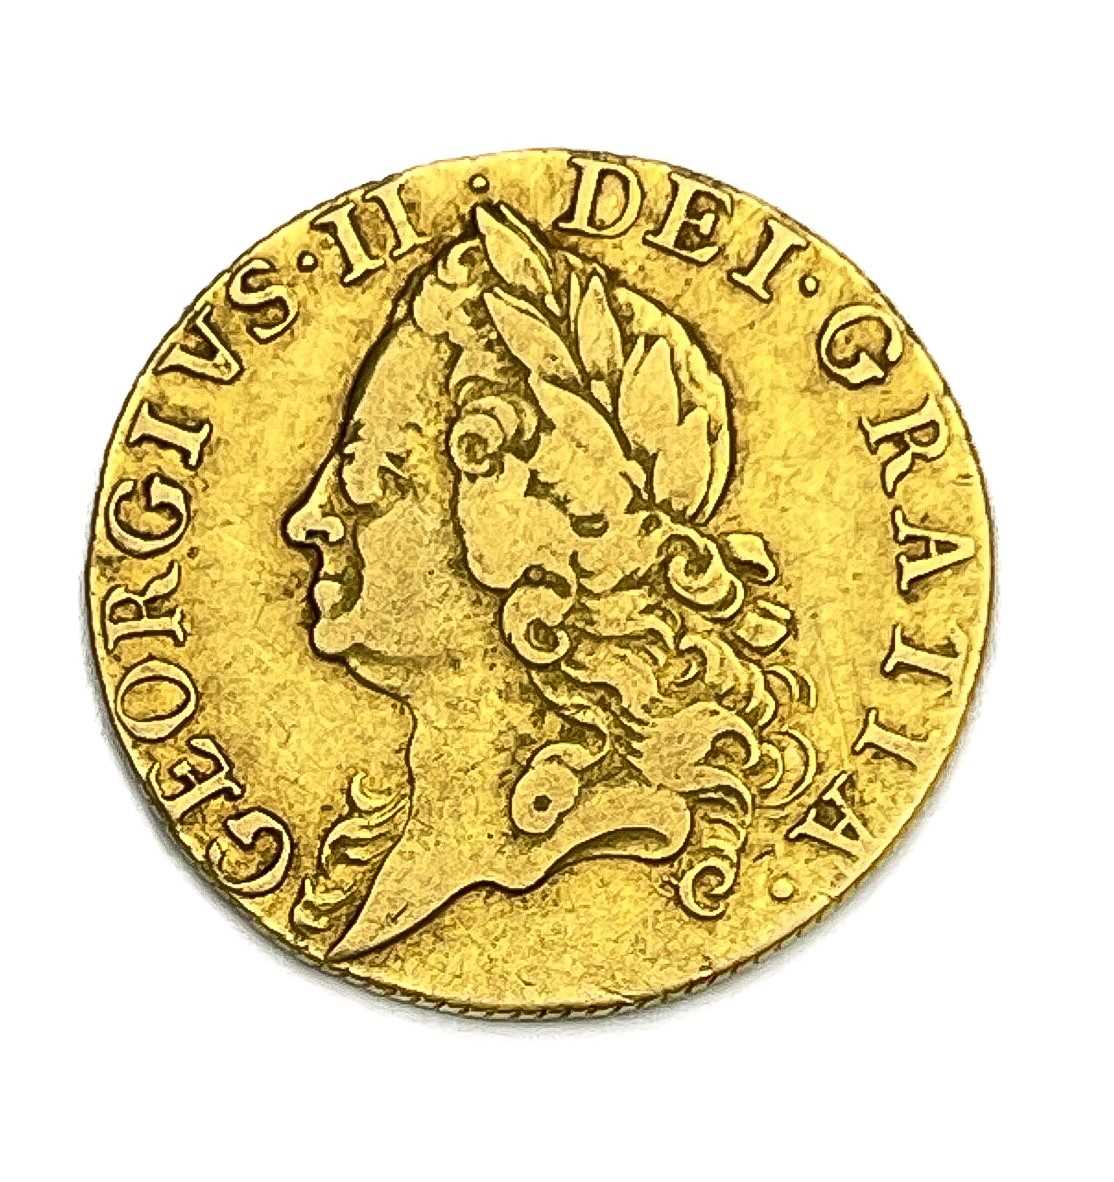 Guinea, George II, 1756. S.3680